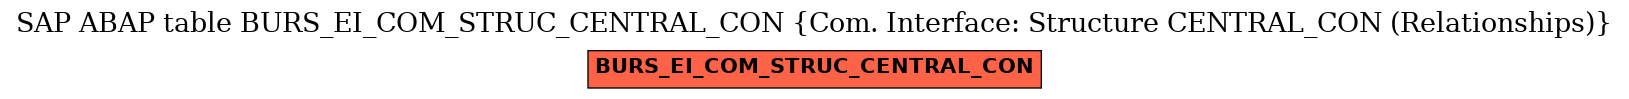 E-R Diagram for table BURS_EI_COM_STRUC_CENTRAL_CON (Com. Interface: Structure CENTRAL_CON (Relationships))